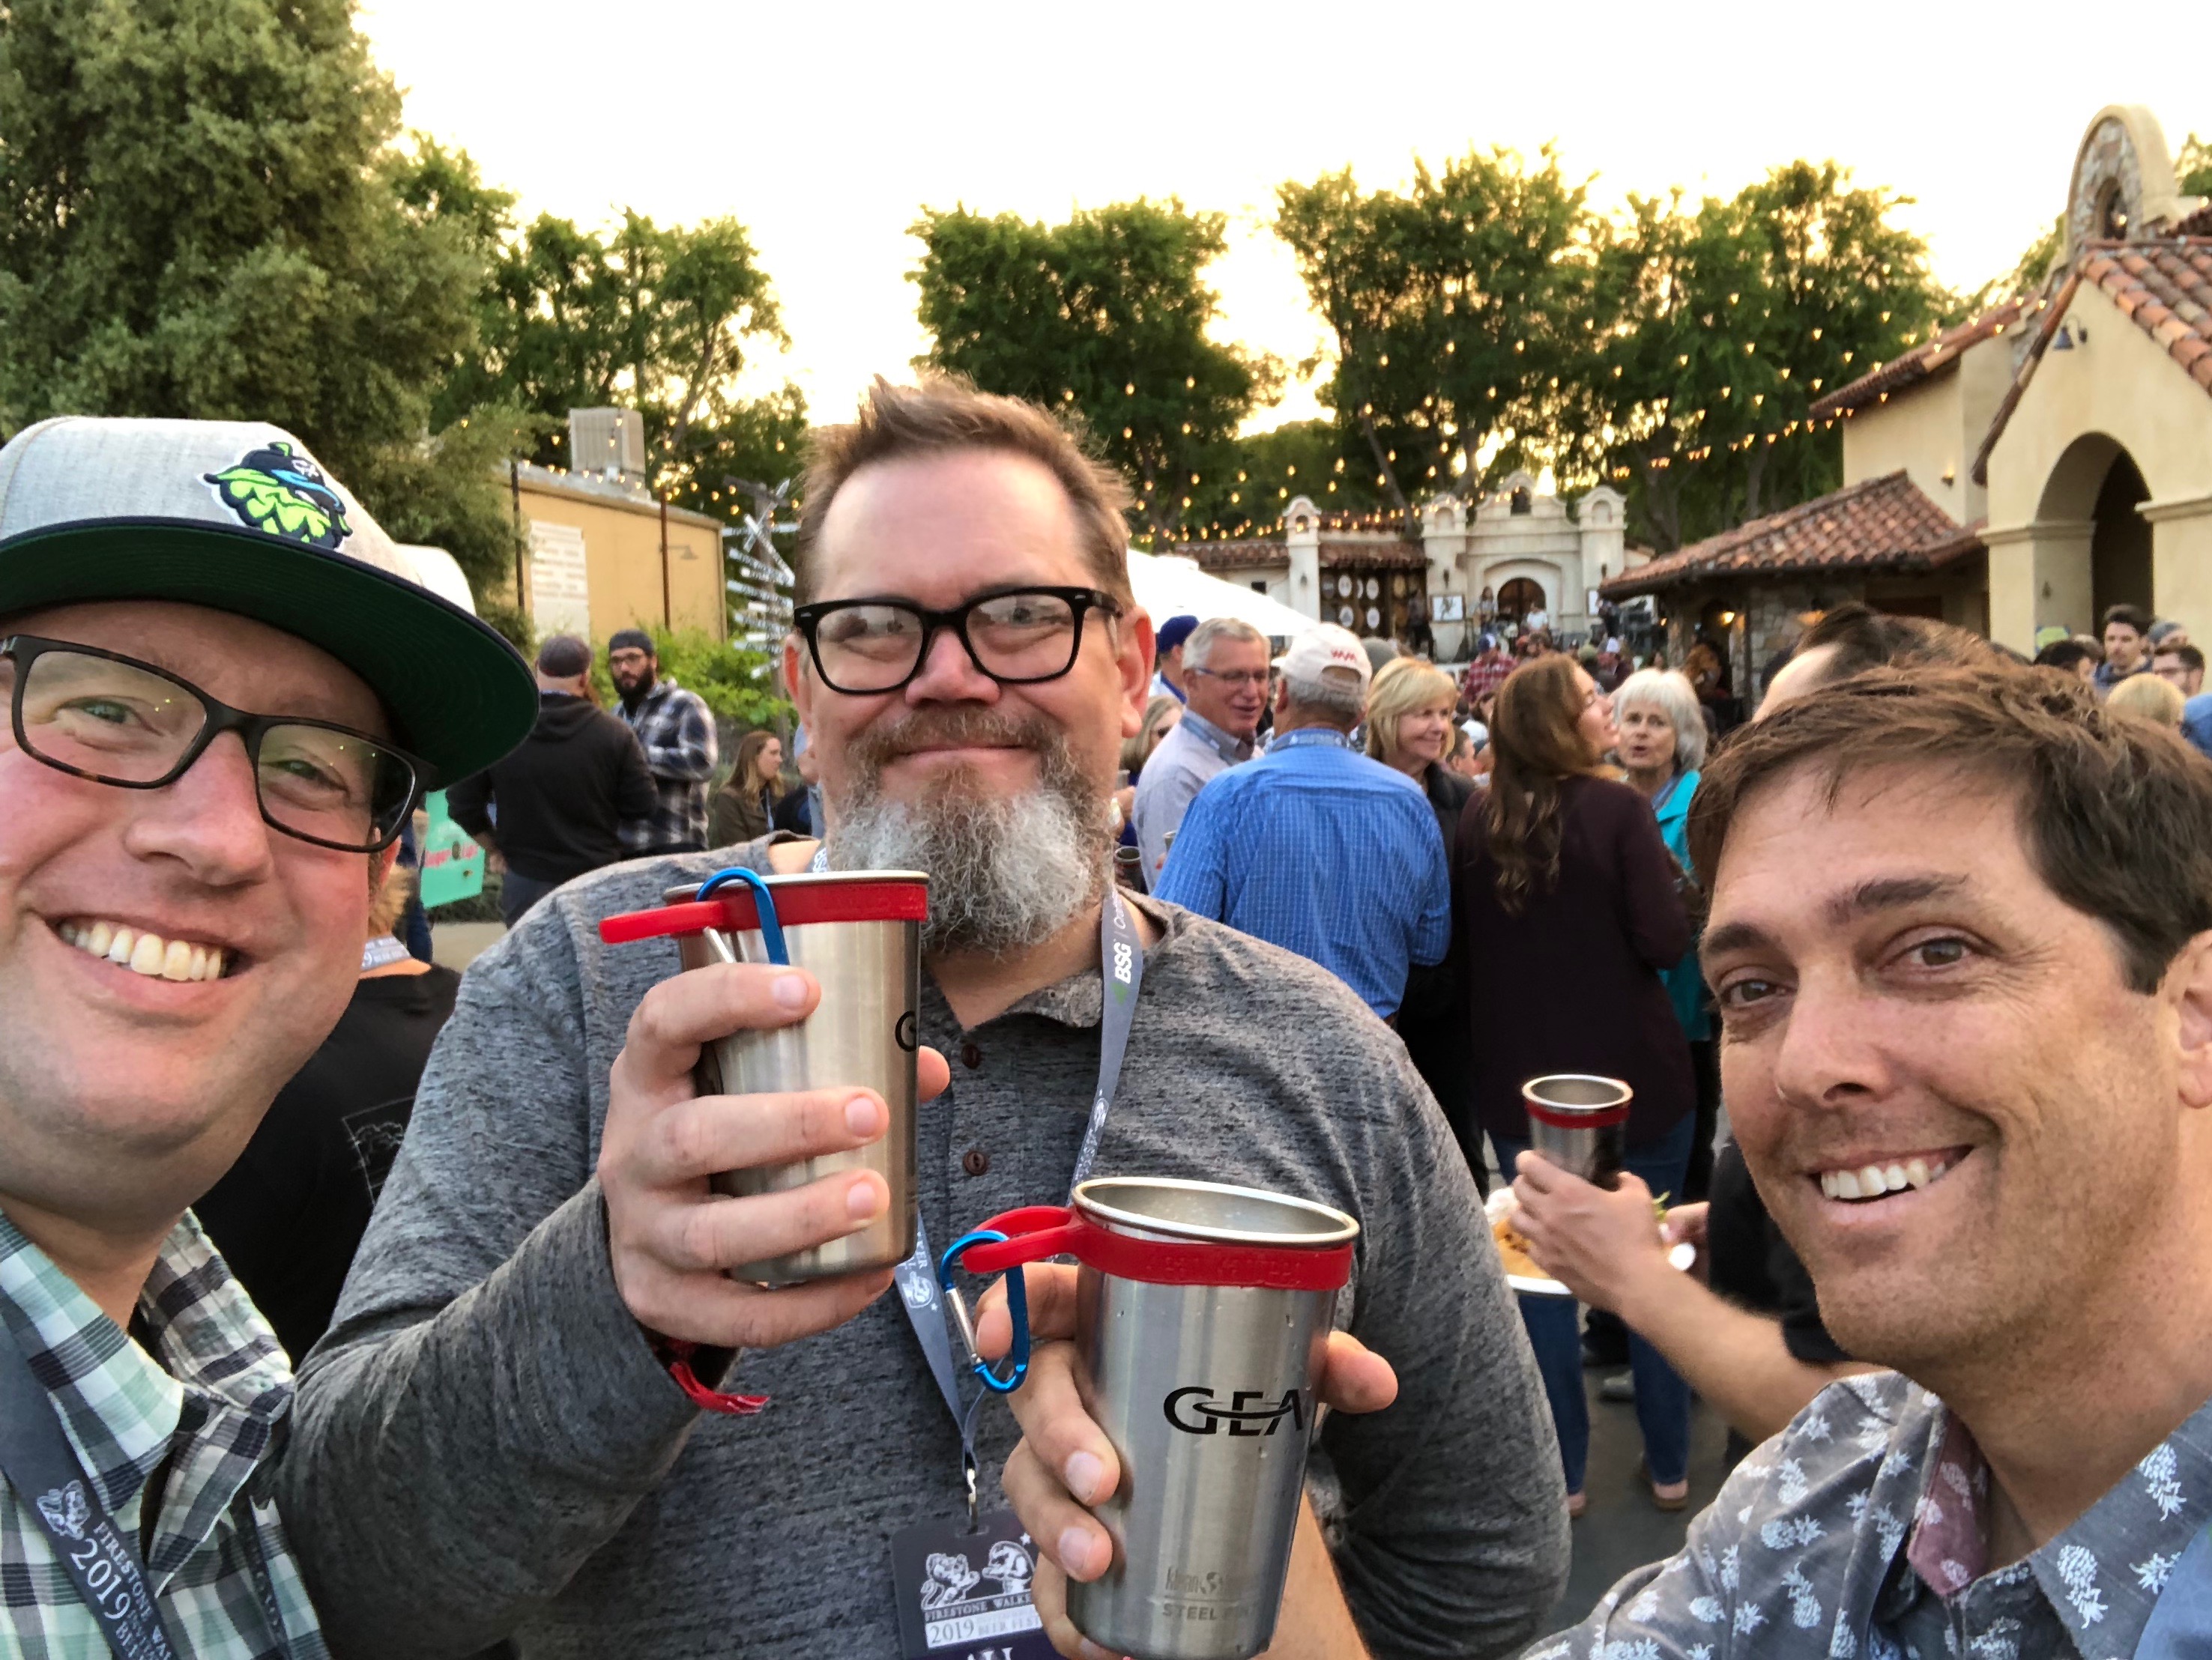 Brewpublic's D.J. Paul, New Belgium's Joel Winn and beer writer Brian Yaeger prefunking the night before the 2019 Firestone Walker Invitational Beer Fest.